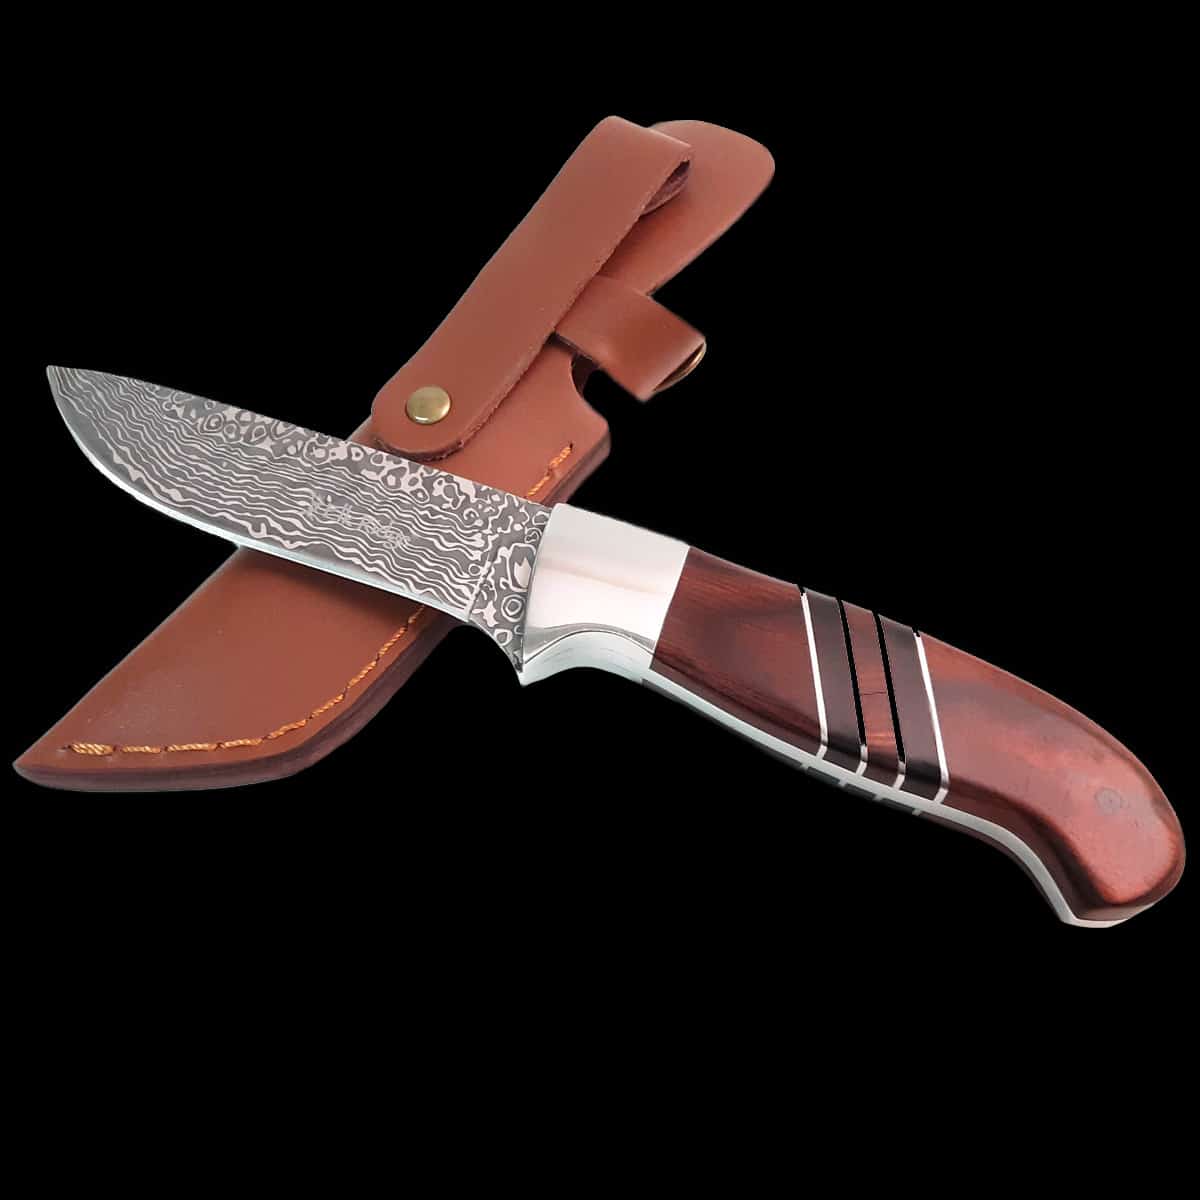 Eagle Head Inlaid Browning knife